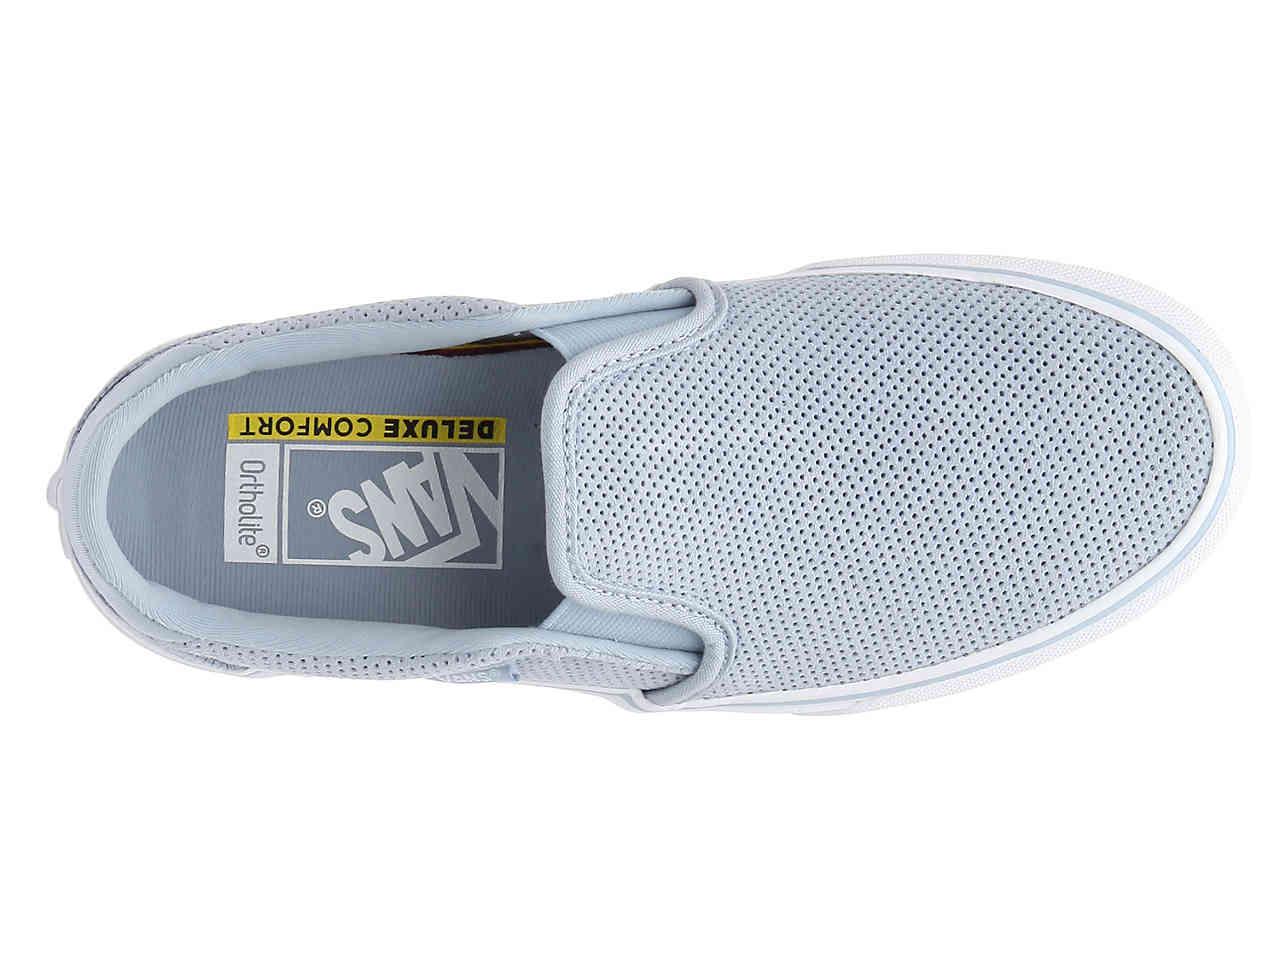 Vans Suede Asher Deluxe Slip-on Sneaker in Sky Blue (Blue) | Lyst